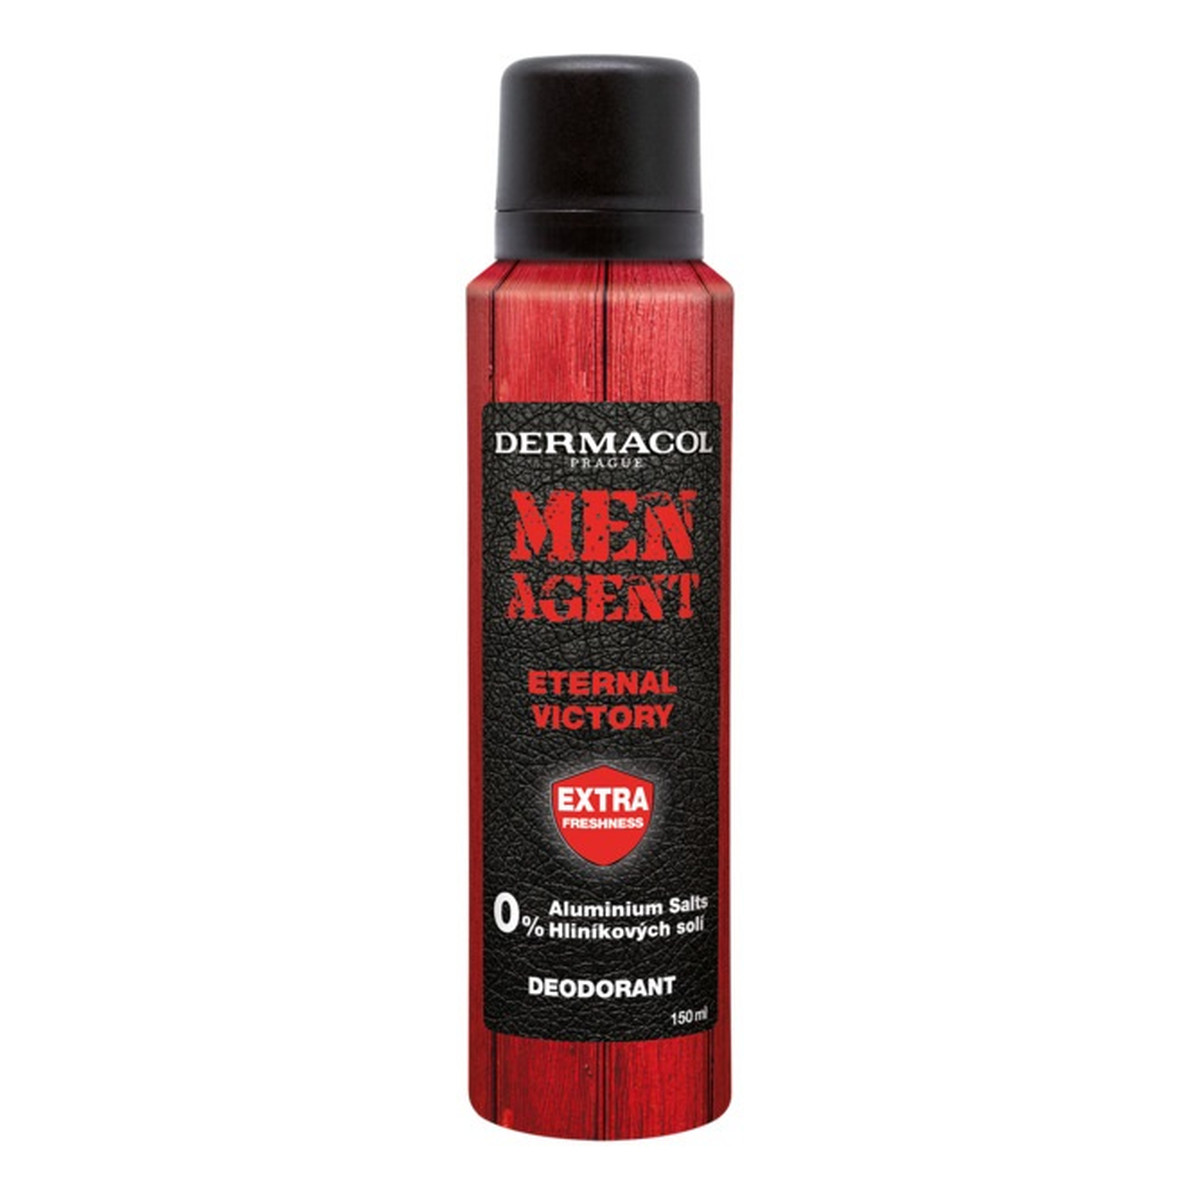 Dermacol Men Agent Deodorant Eternal Victory Dezodorant w sprayu 150ml